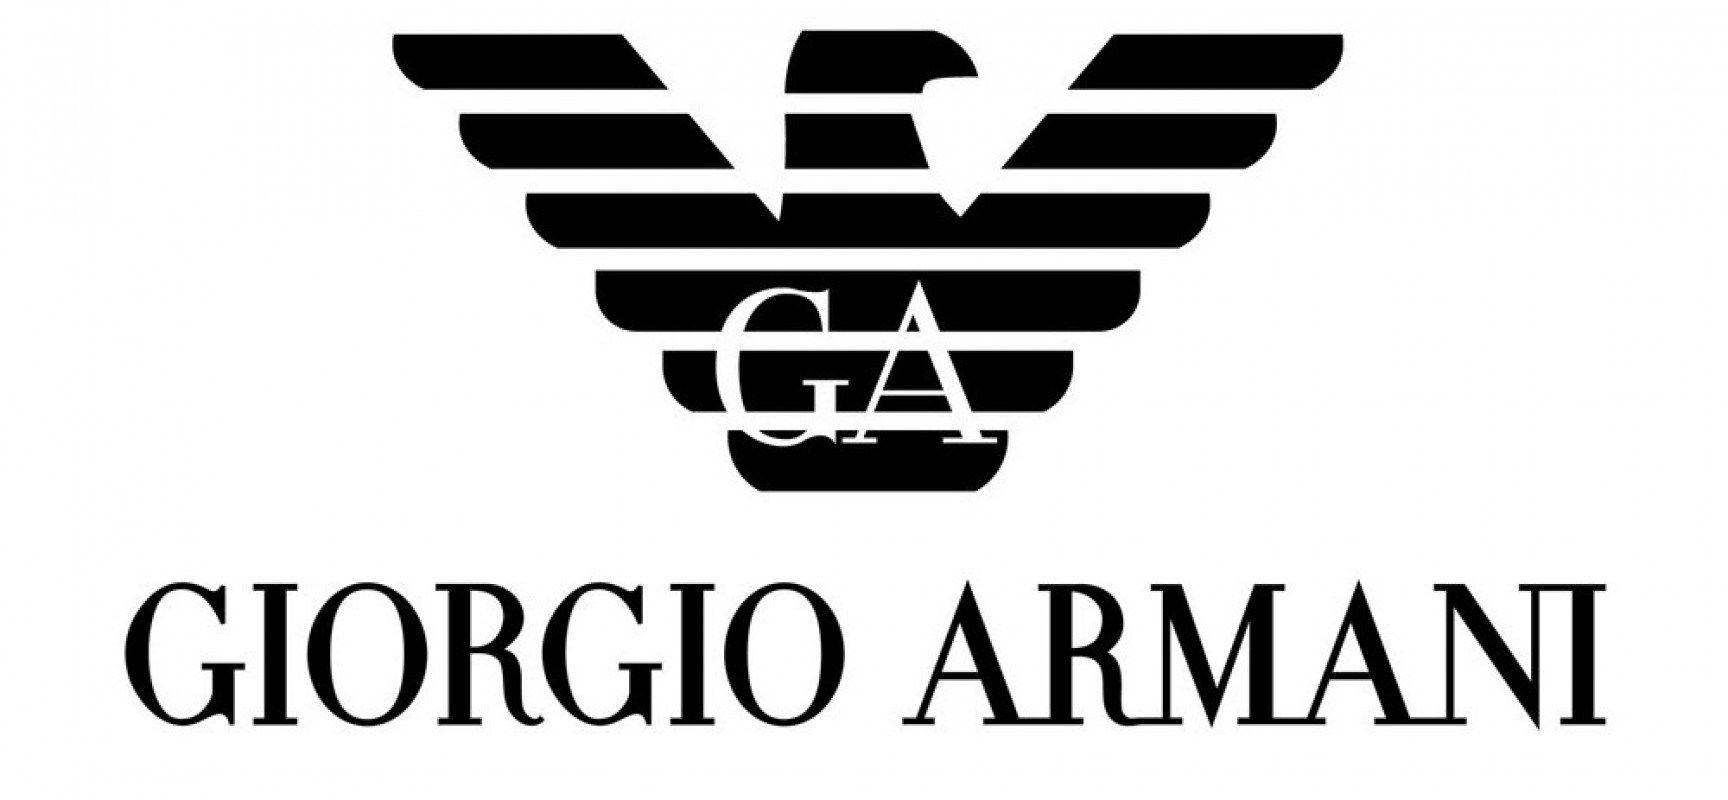 giorgio armani logo HD